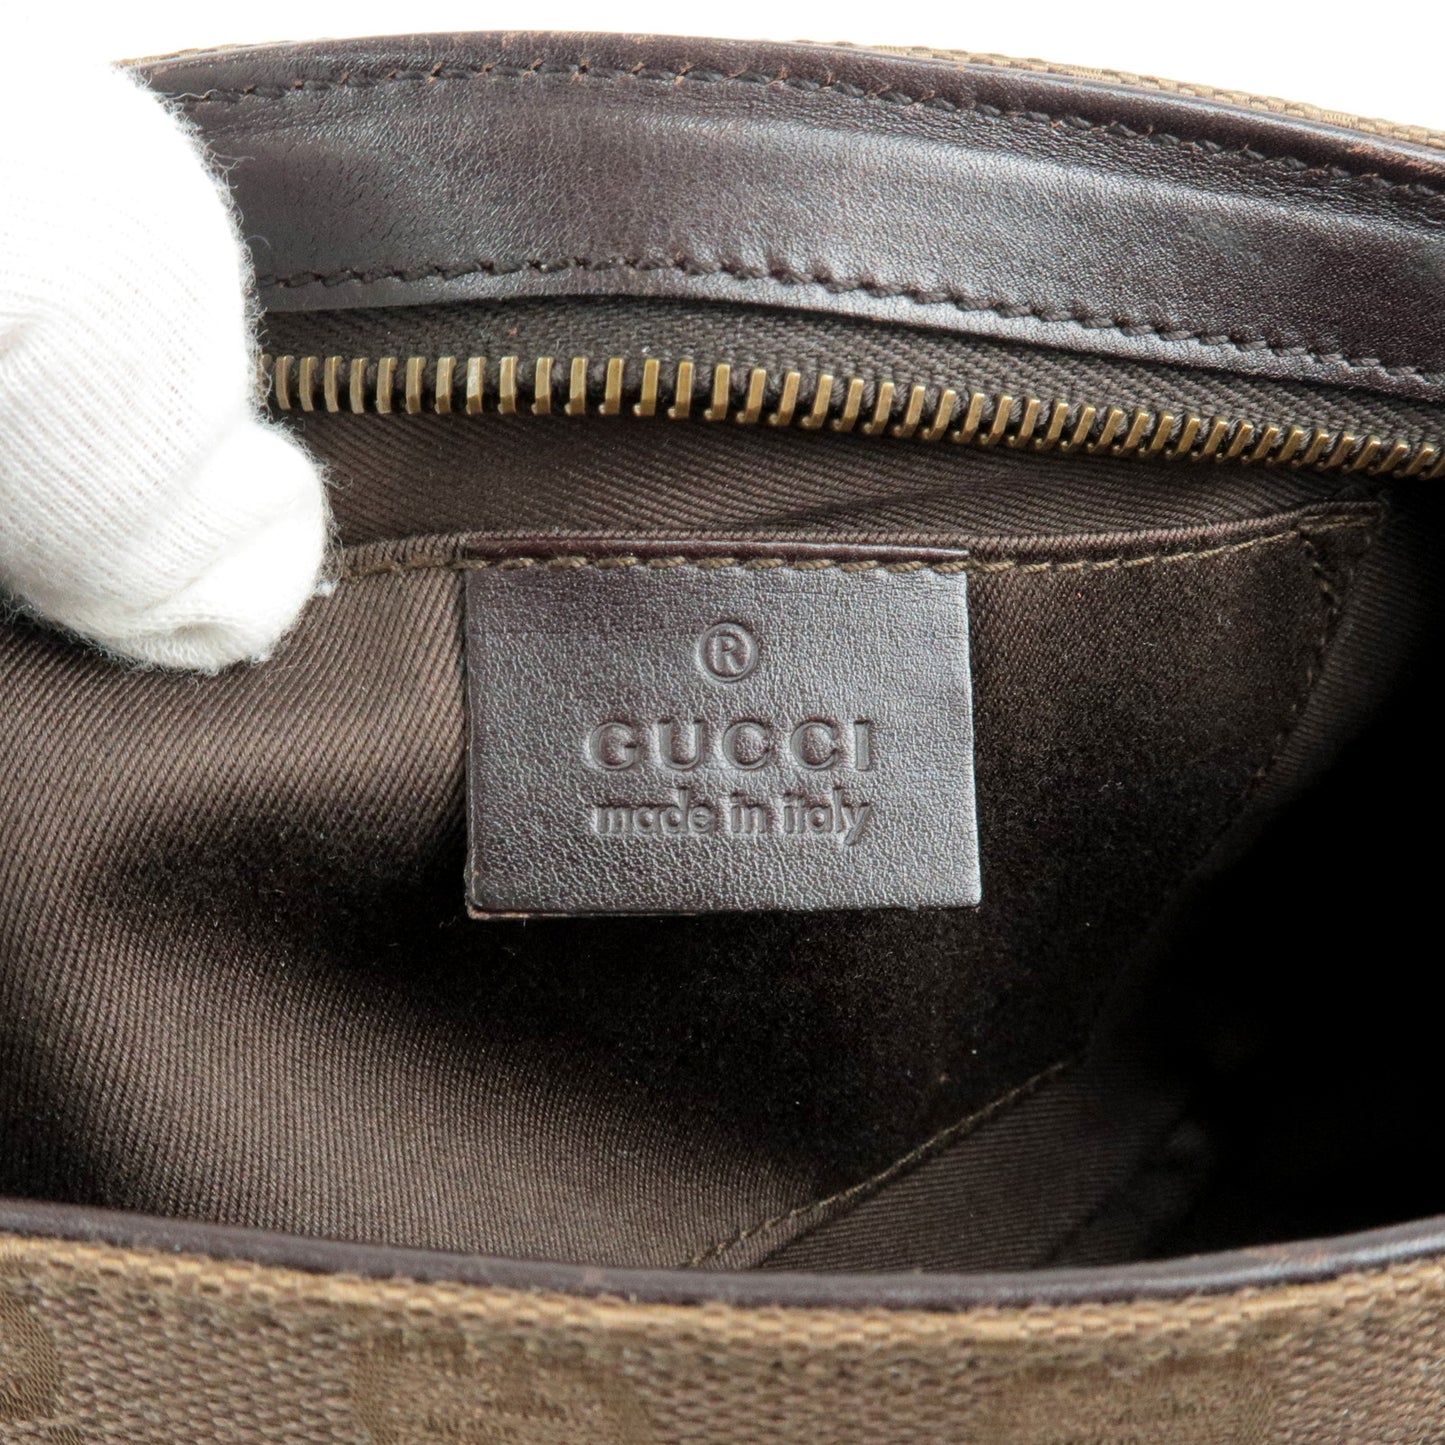 GUCCI GG Canvas Leather Shoulder Bag Pouch Purse Brown 106644